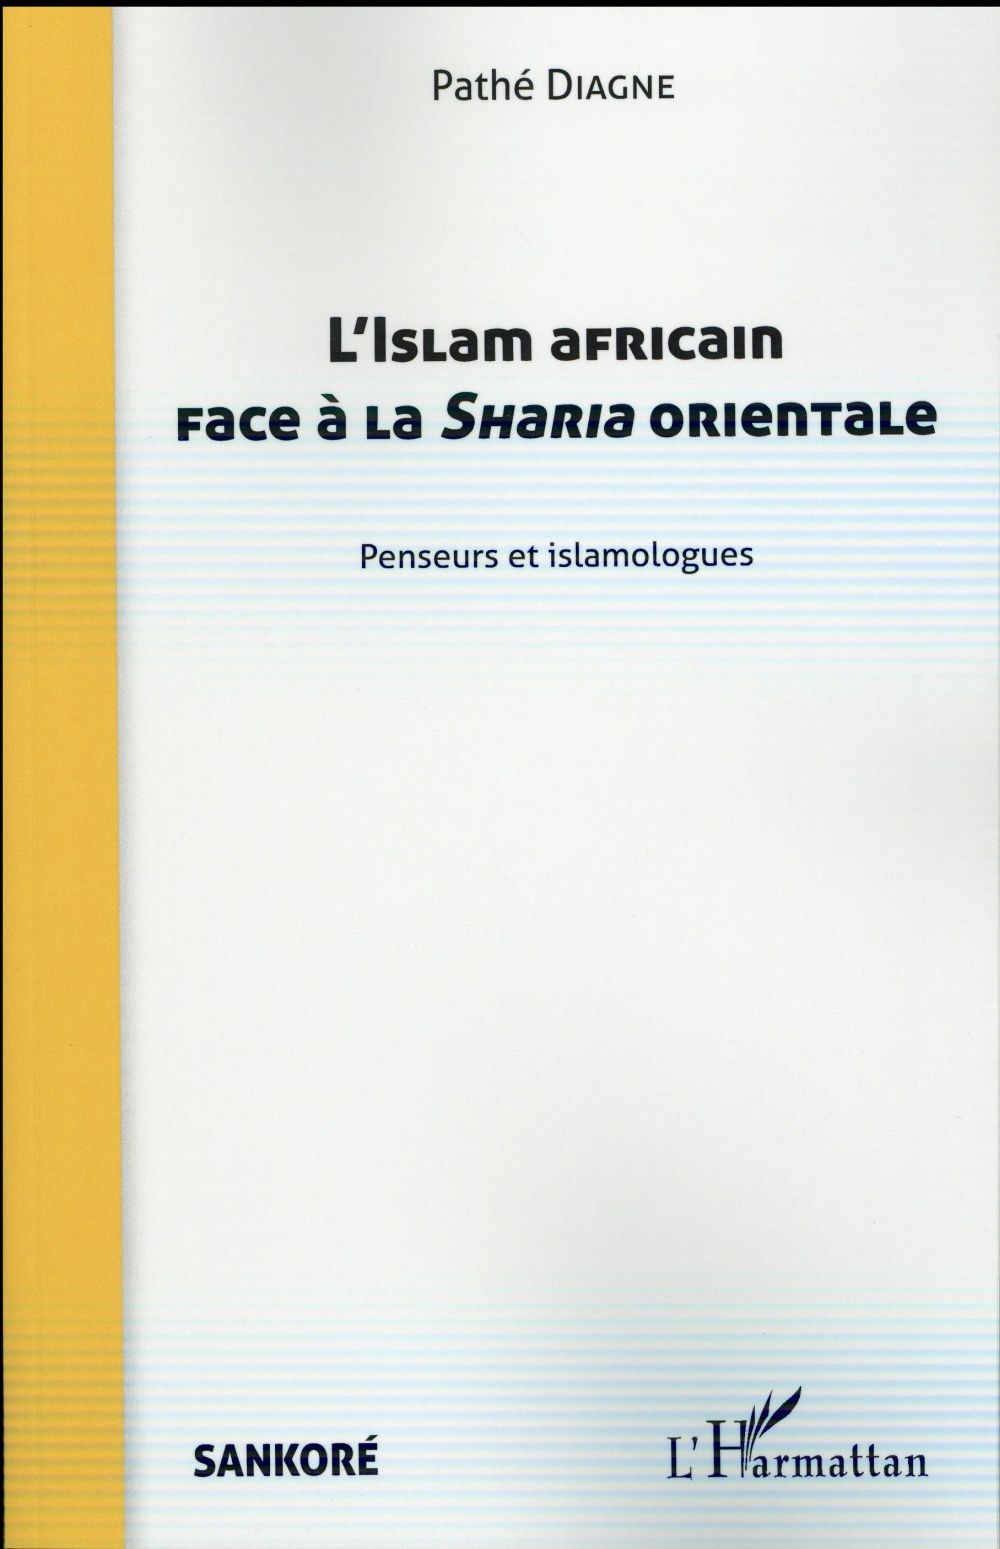 L'ISLAM AFRICAIN FACE A LA SHARIA ORIENTALE - PENSEURS ET ISLAMOLOGUES